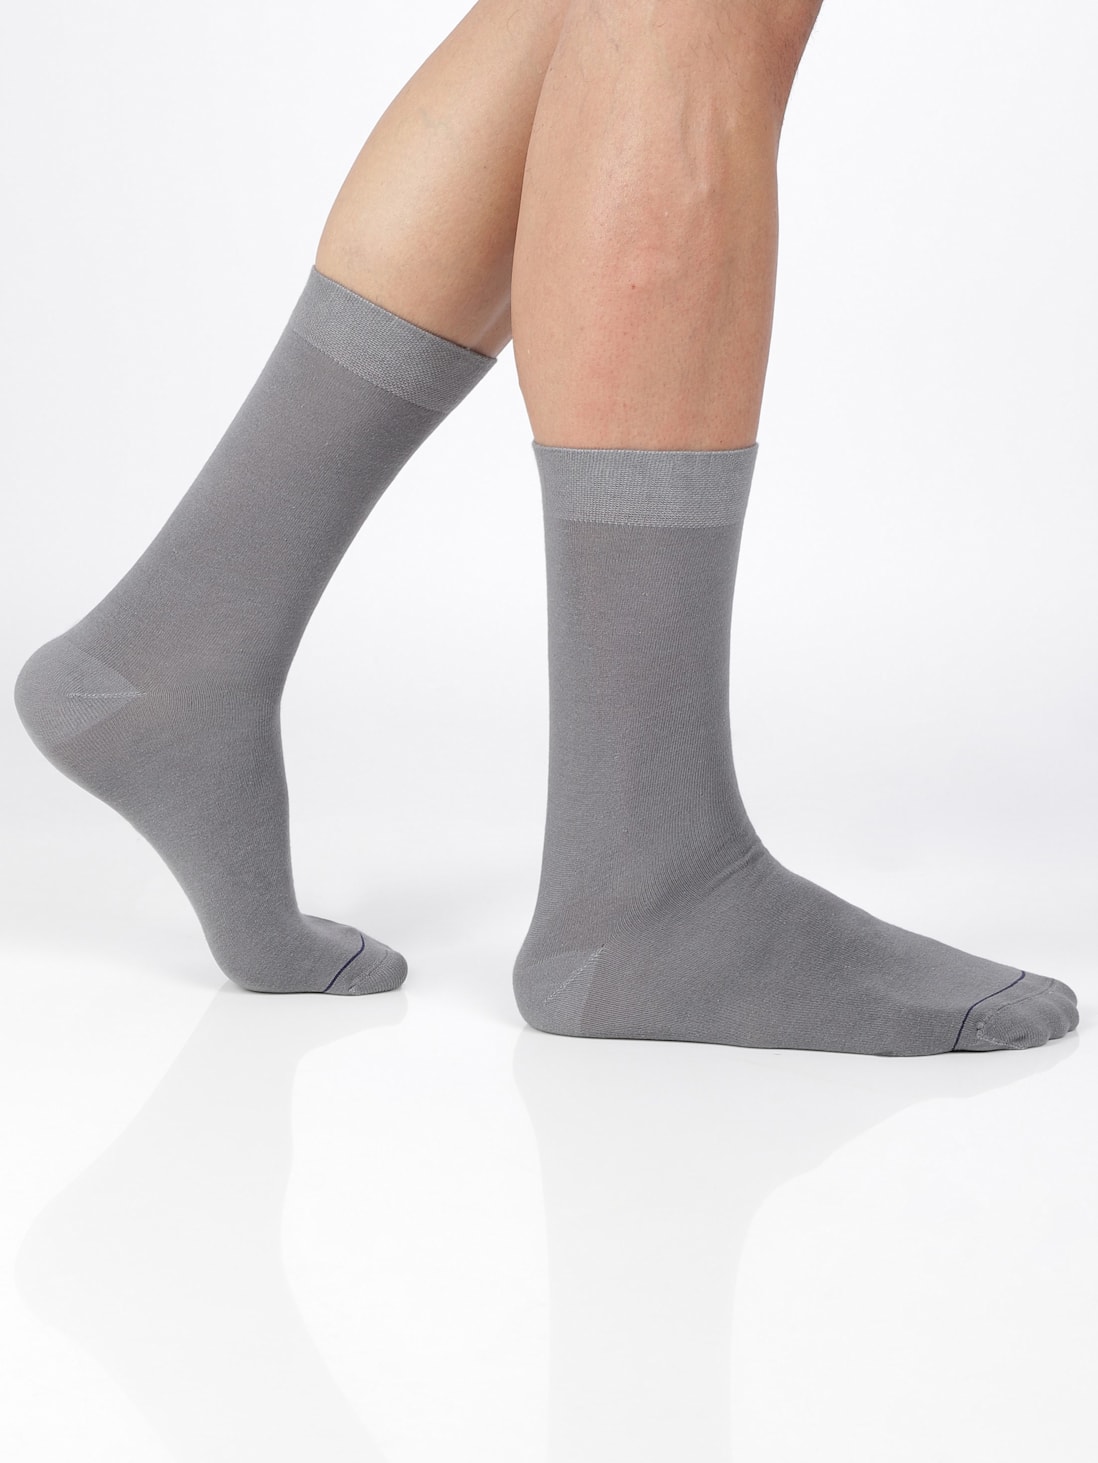 Buy Men's Modal Cotton Stretch Crew Length Socks with Stay Fresh ...